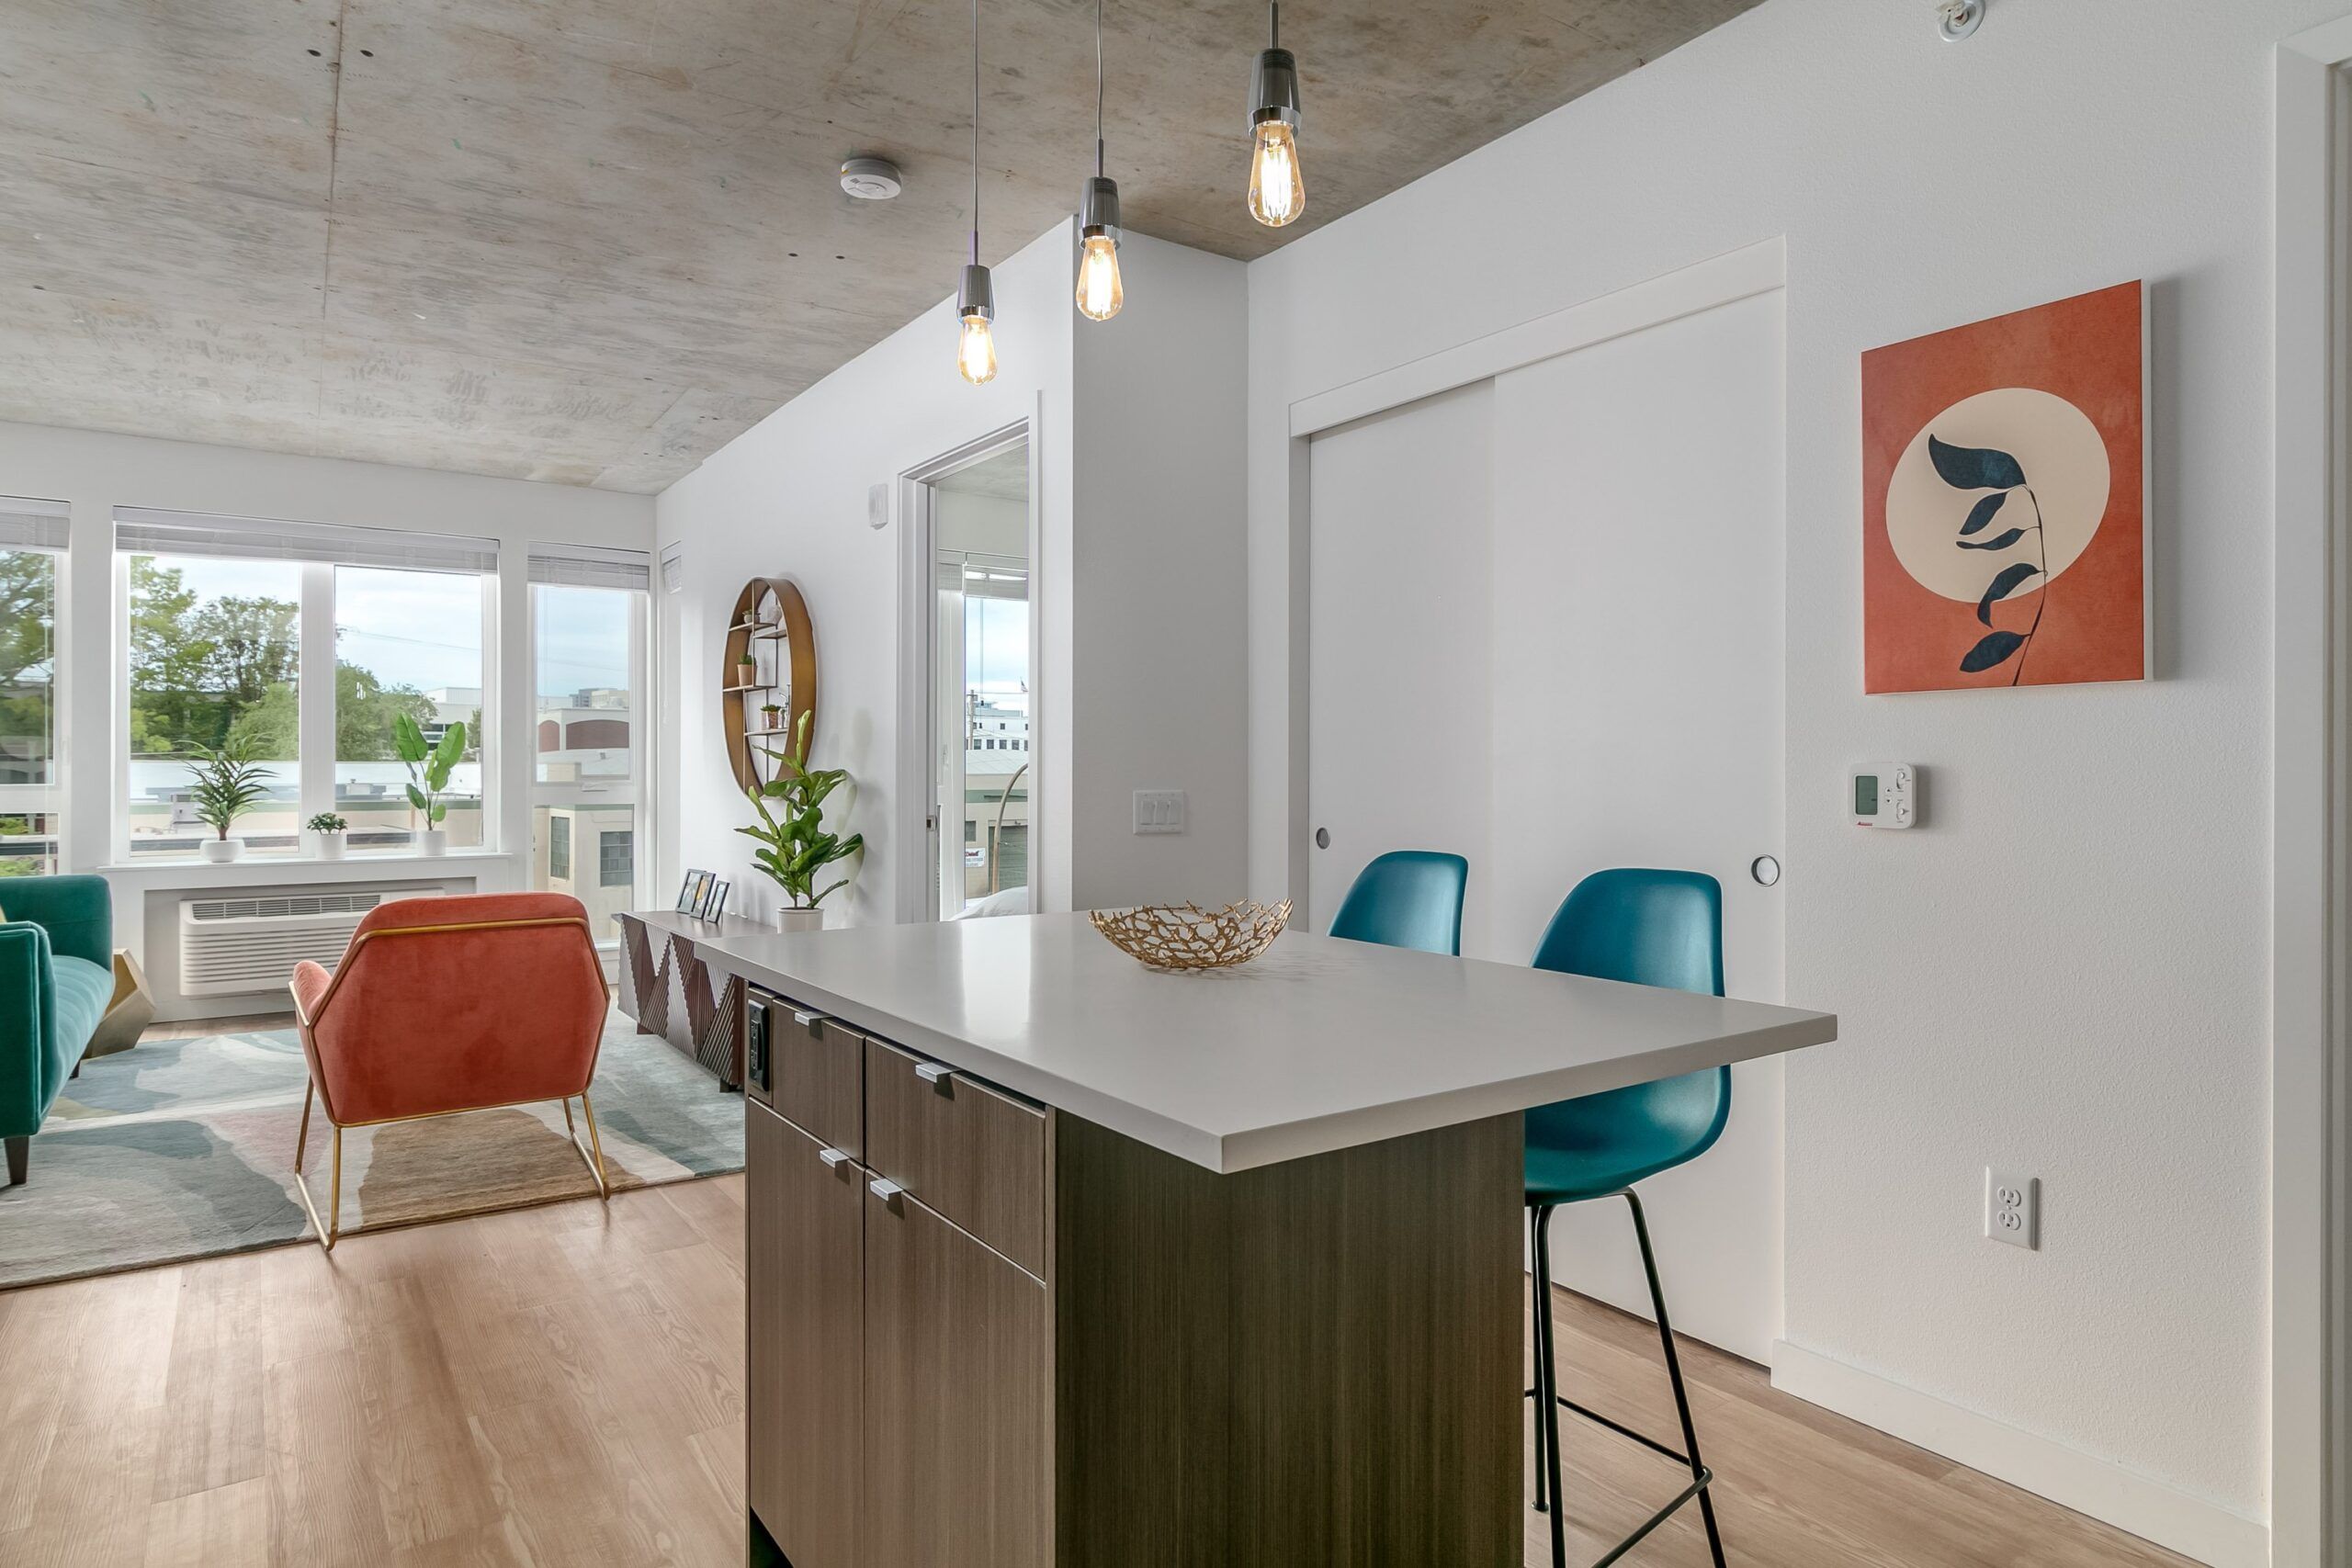 Alta Peak apartments interior showing kitchen island with bar stools